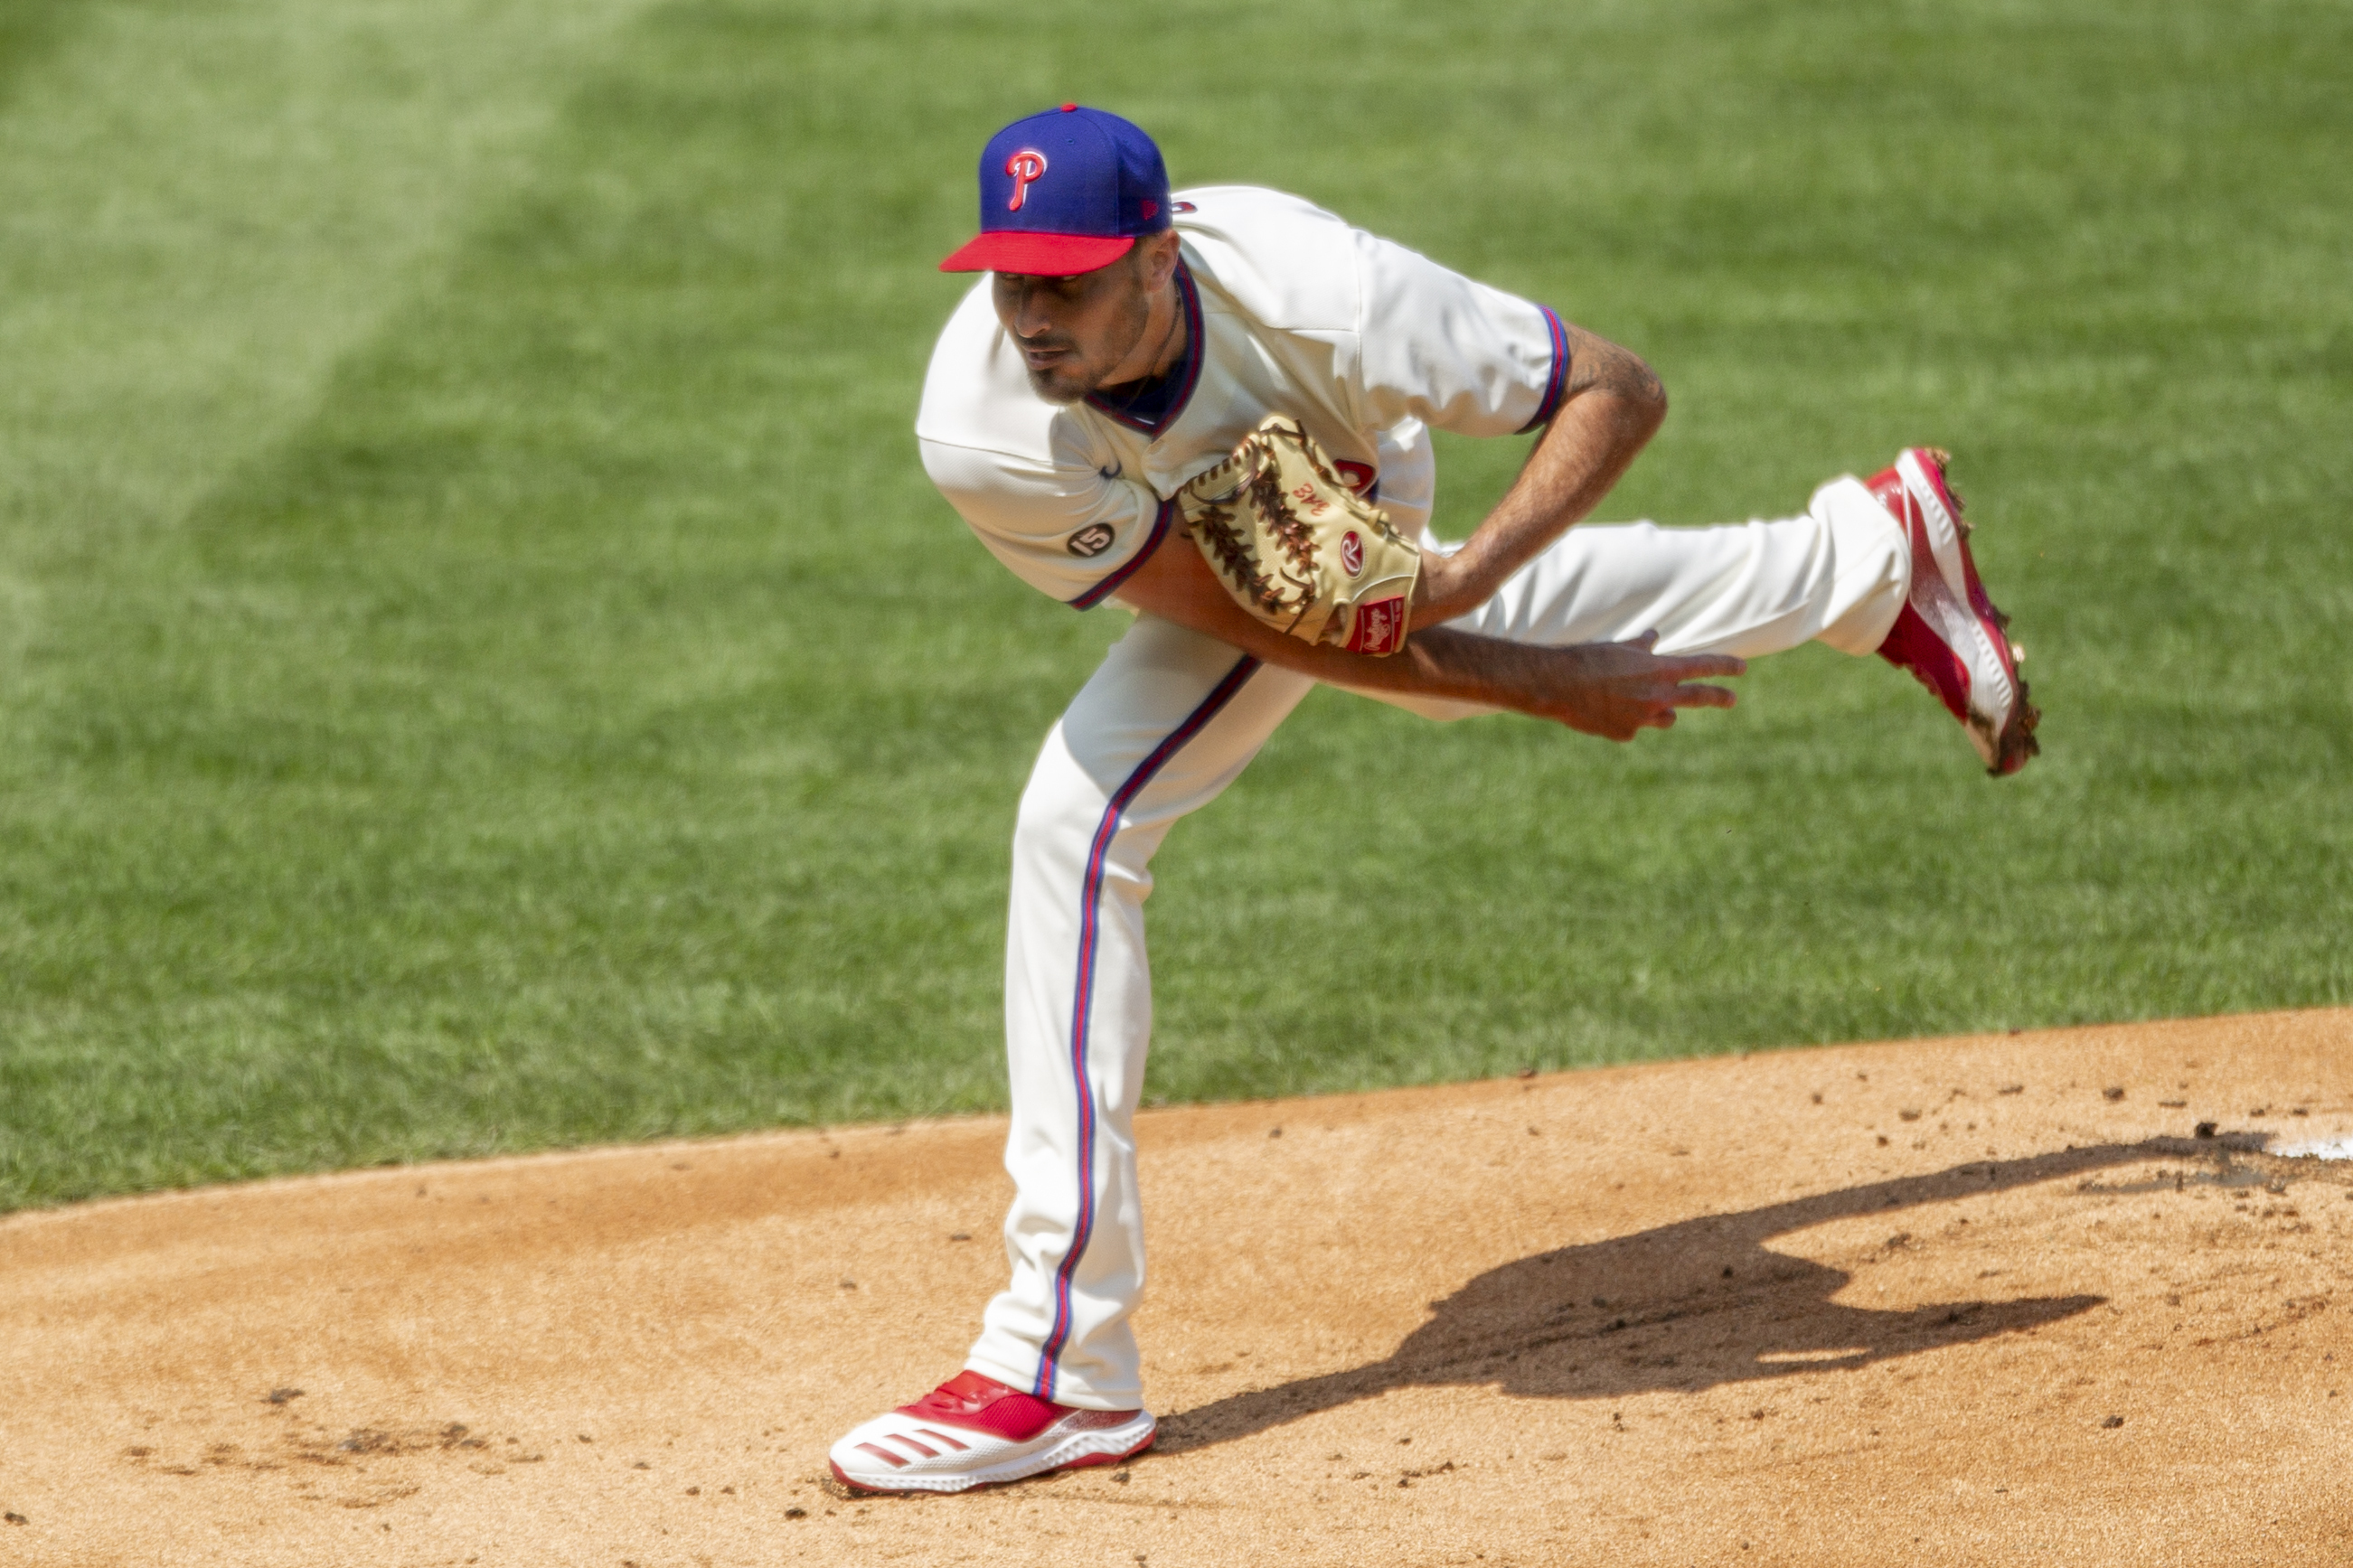 Phillies pitchers dominate again, sweep Braves on Bohm hit – KSNF